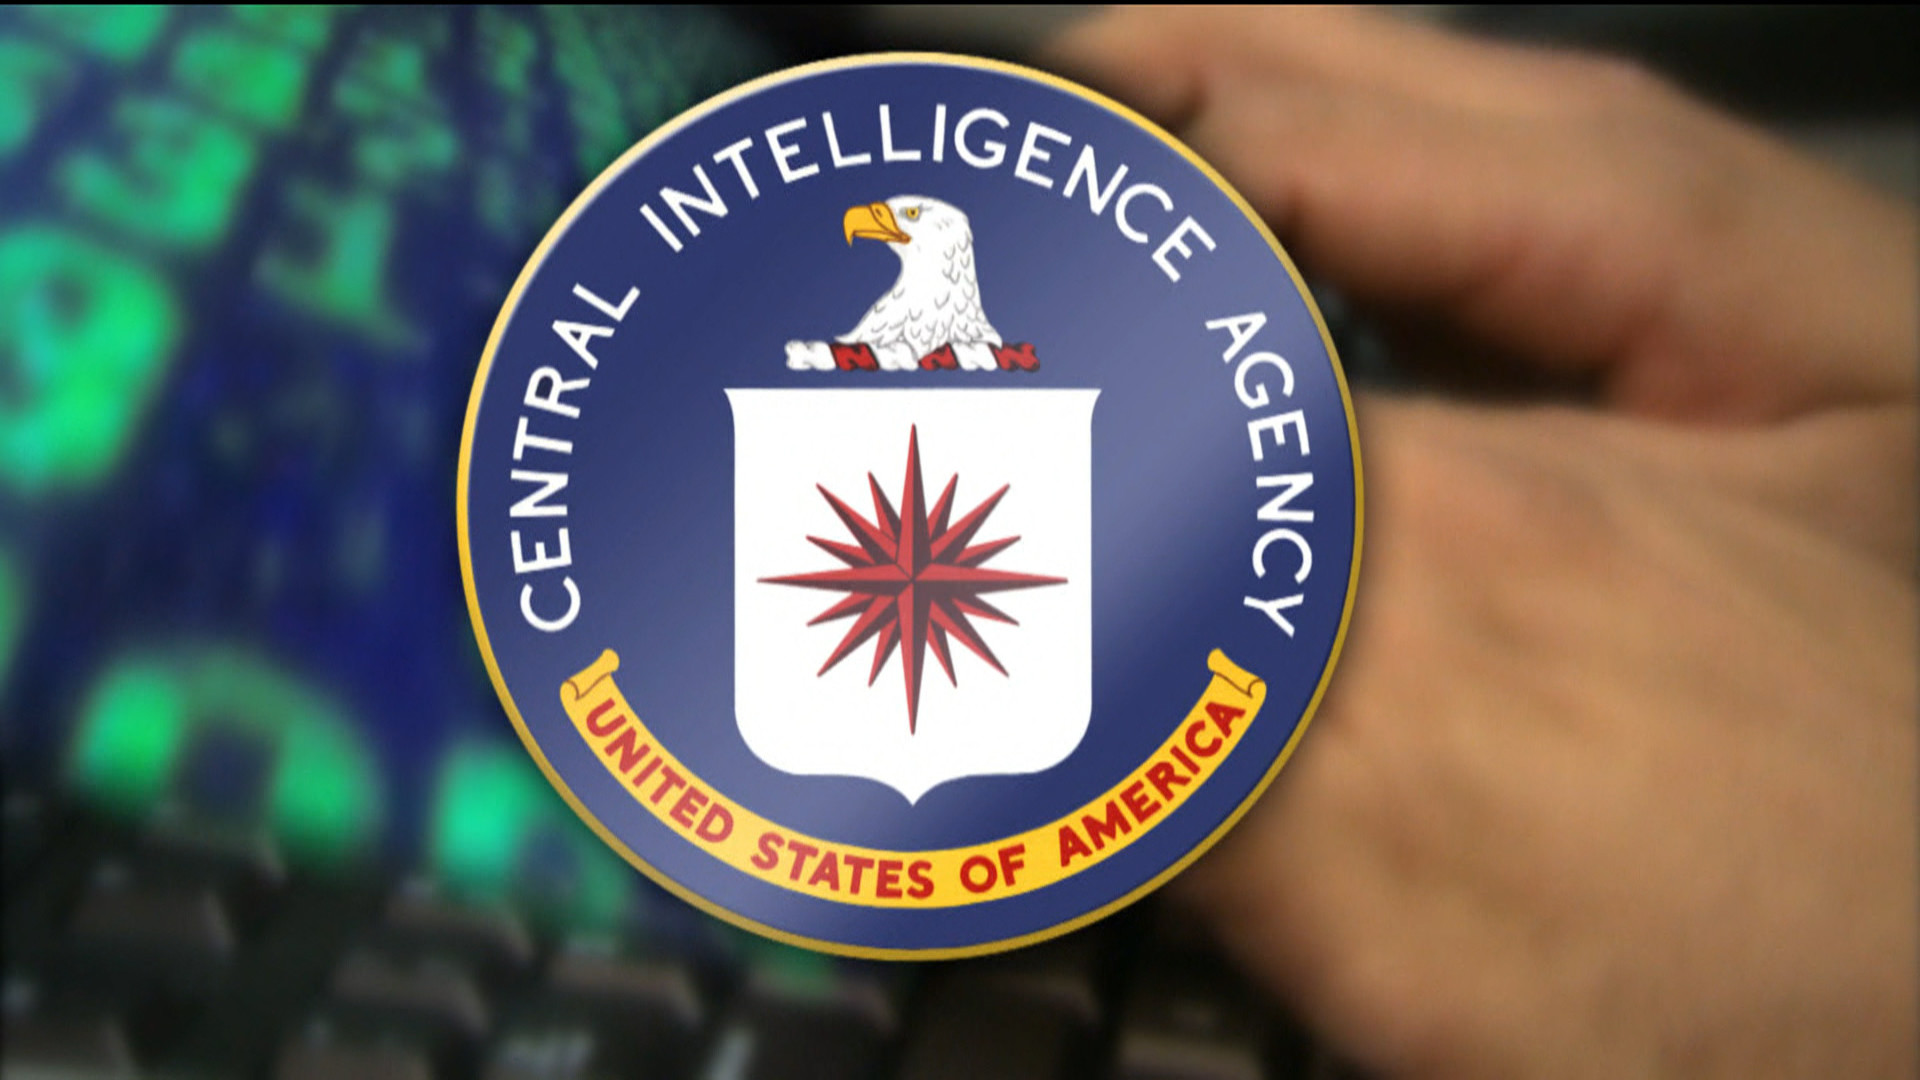 1920x1080 CIA Director Brennan Apologizes to Senate Leaders for Computer 'Hack' - NBC  News